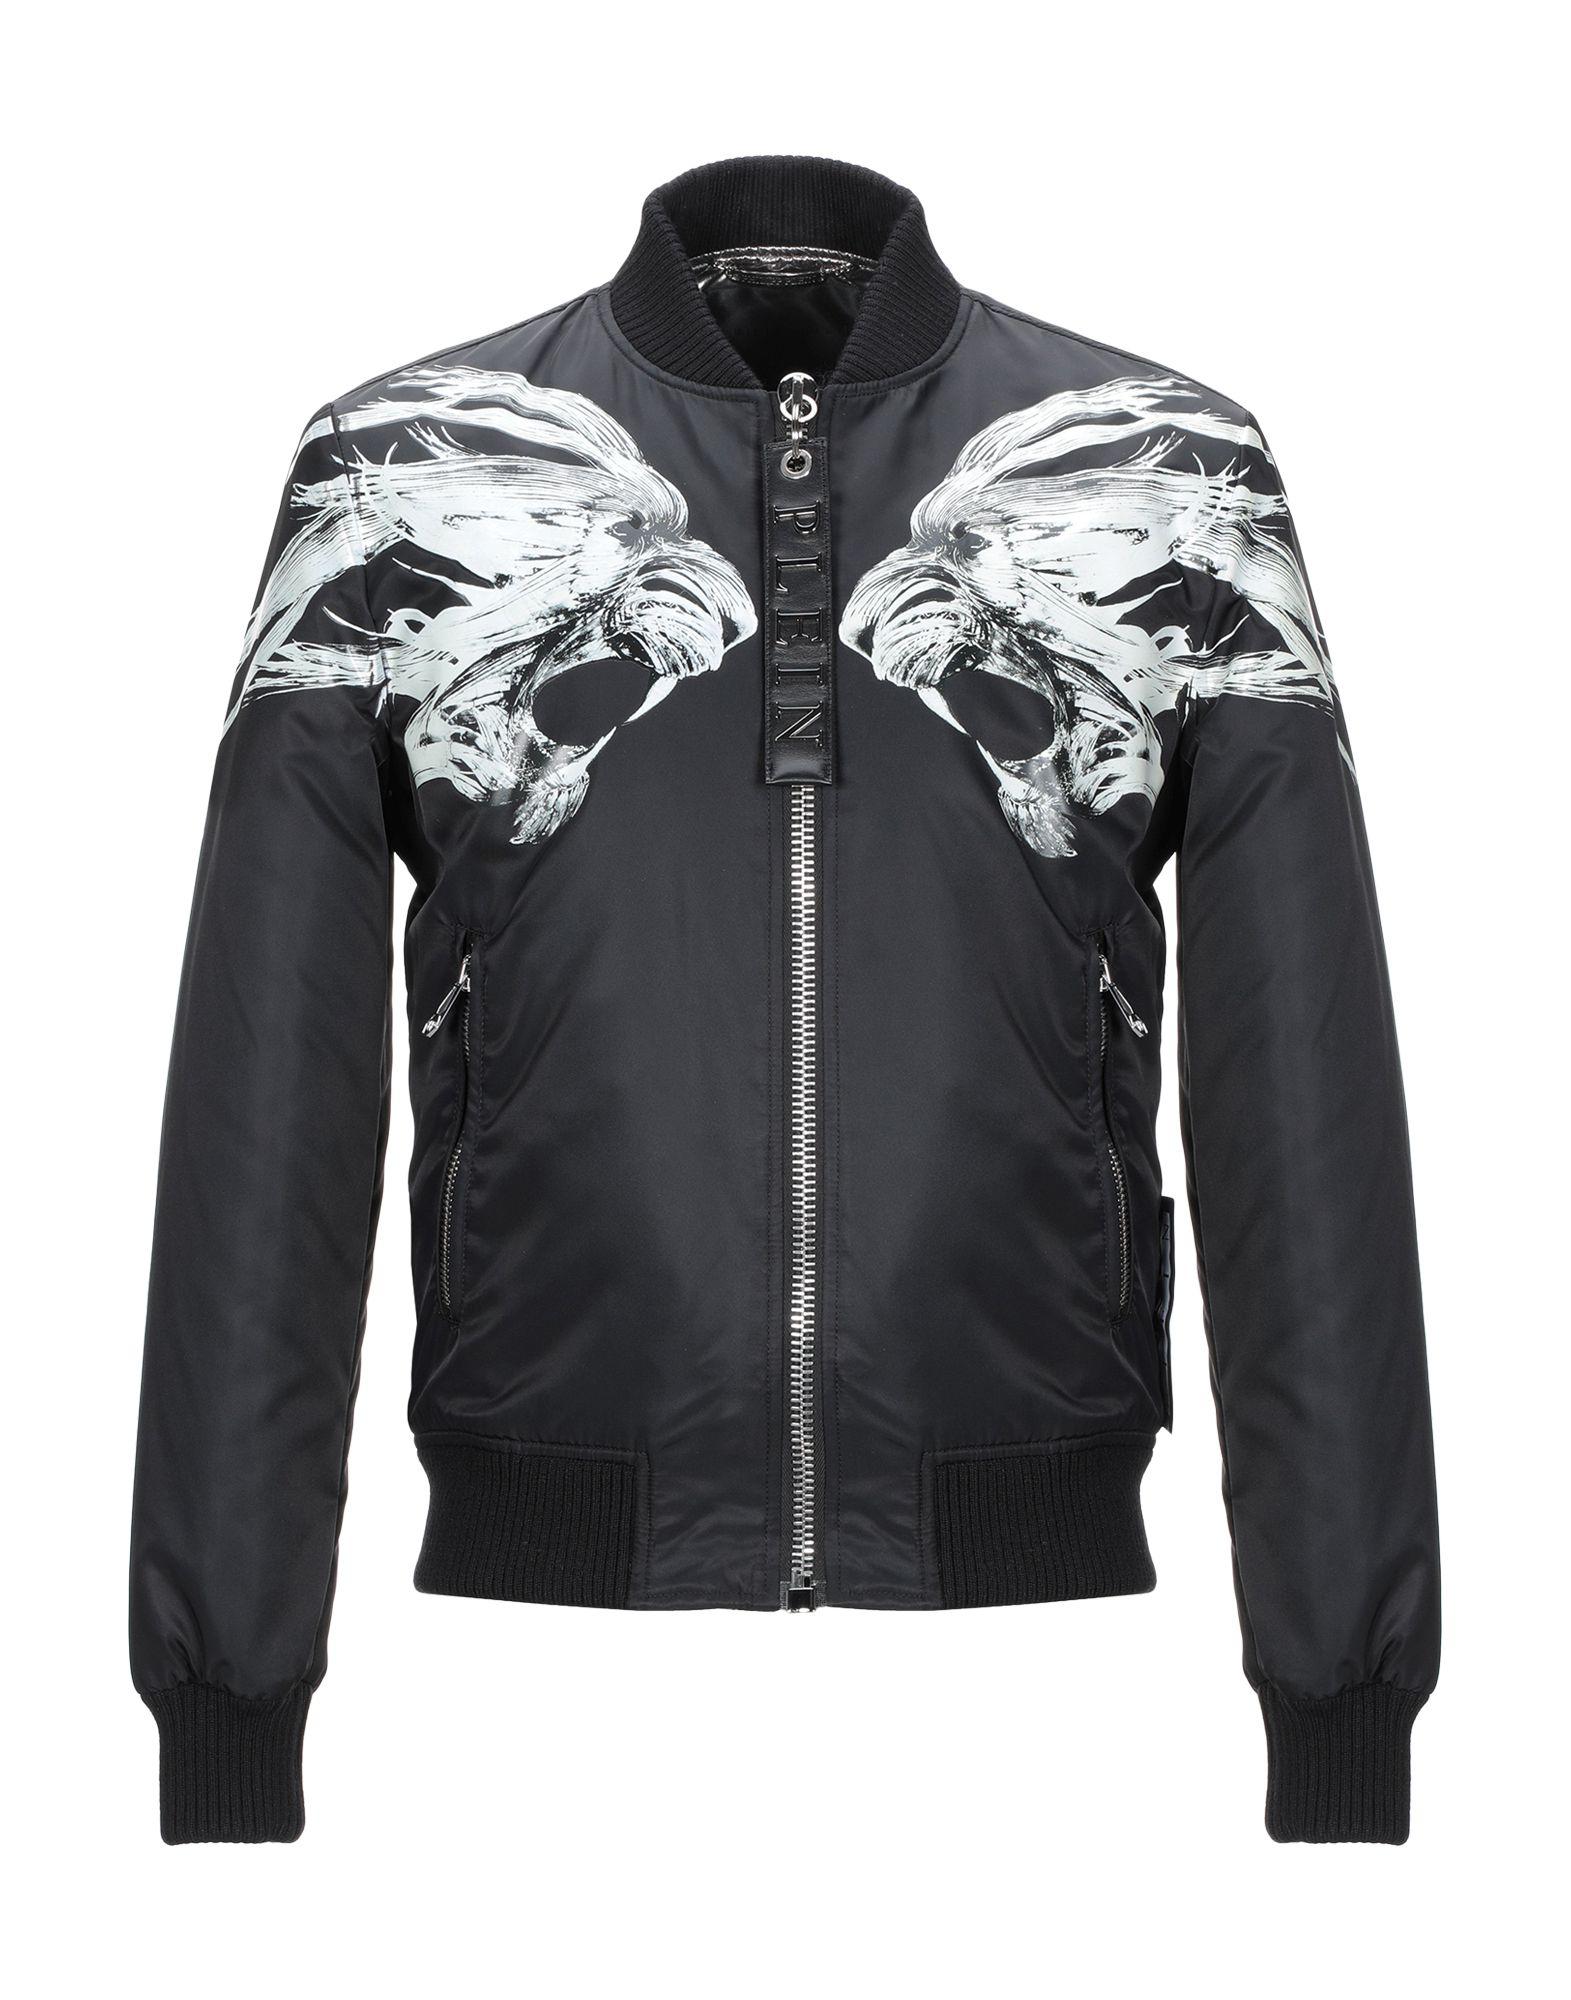 Philipp Plein Synthetic Jacket in Black for Men - Lyst